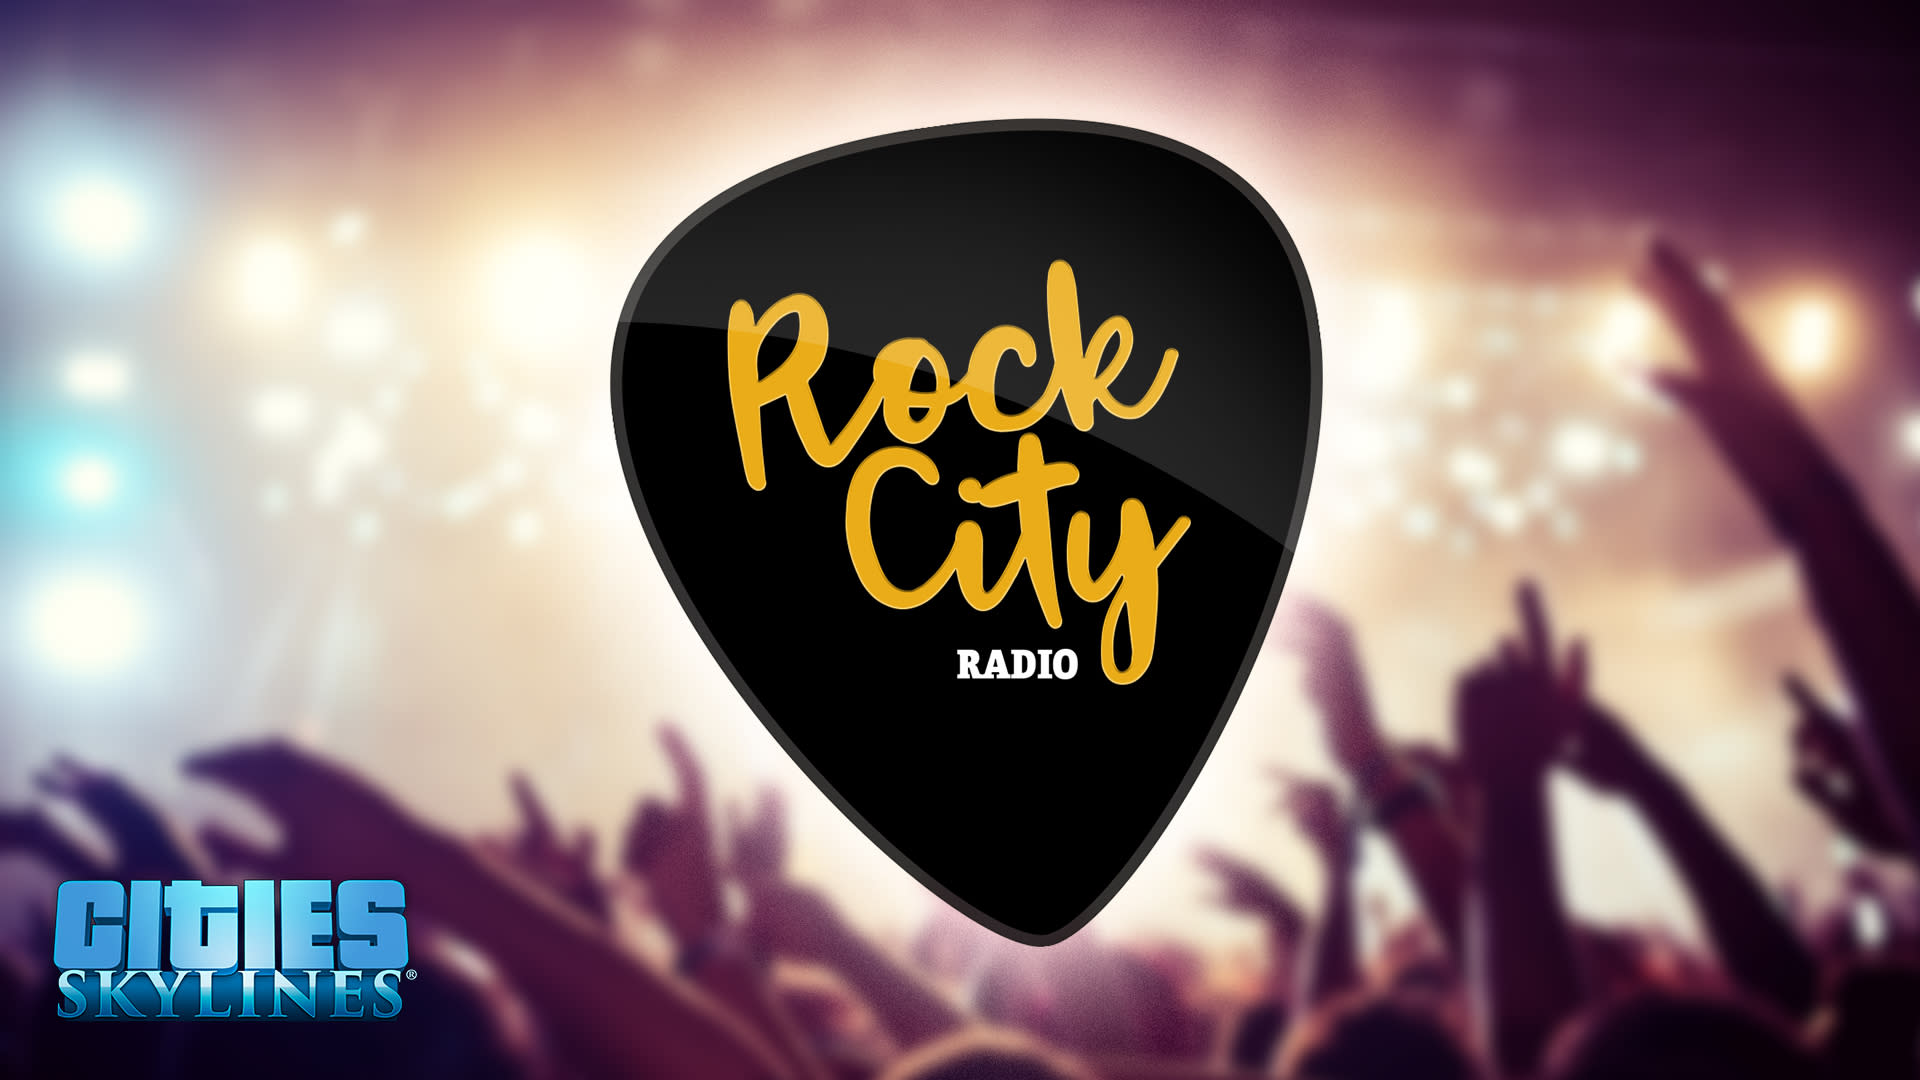 Cities: Skylines - Rock City Radio (screenshot 1)